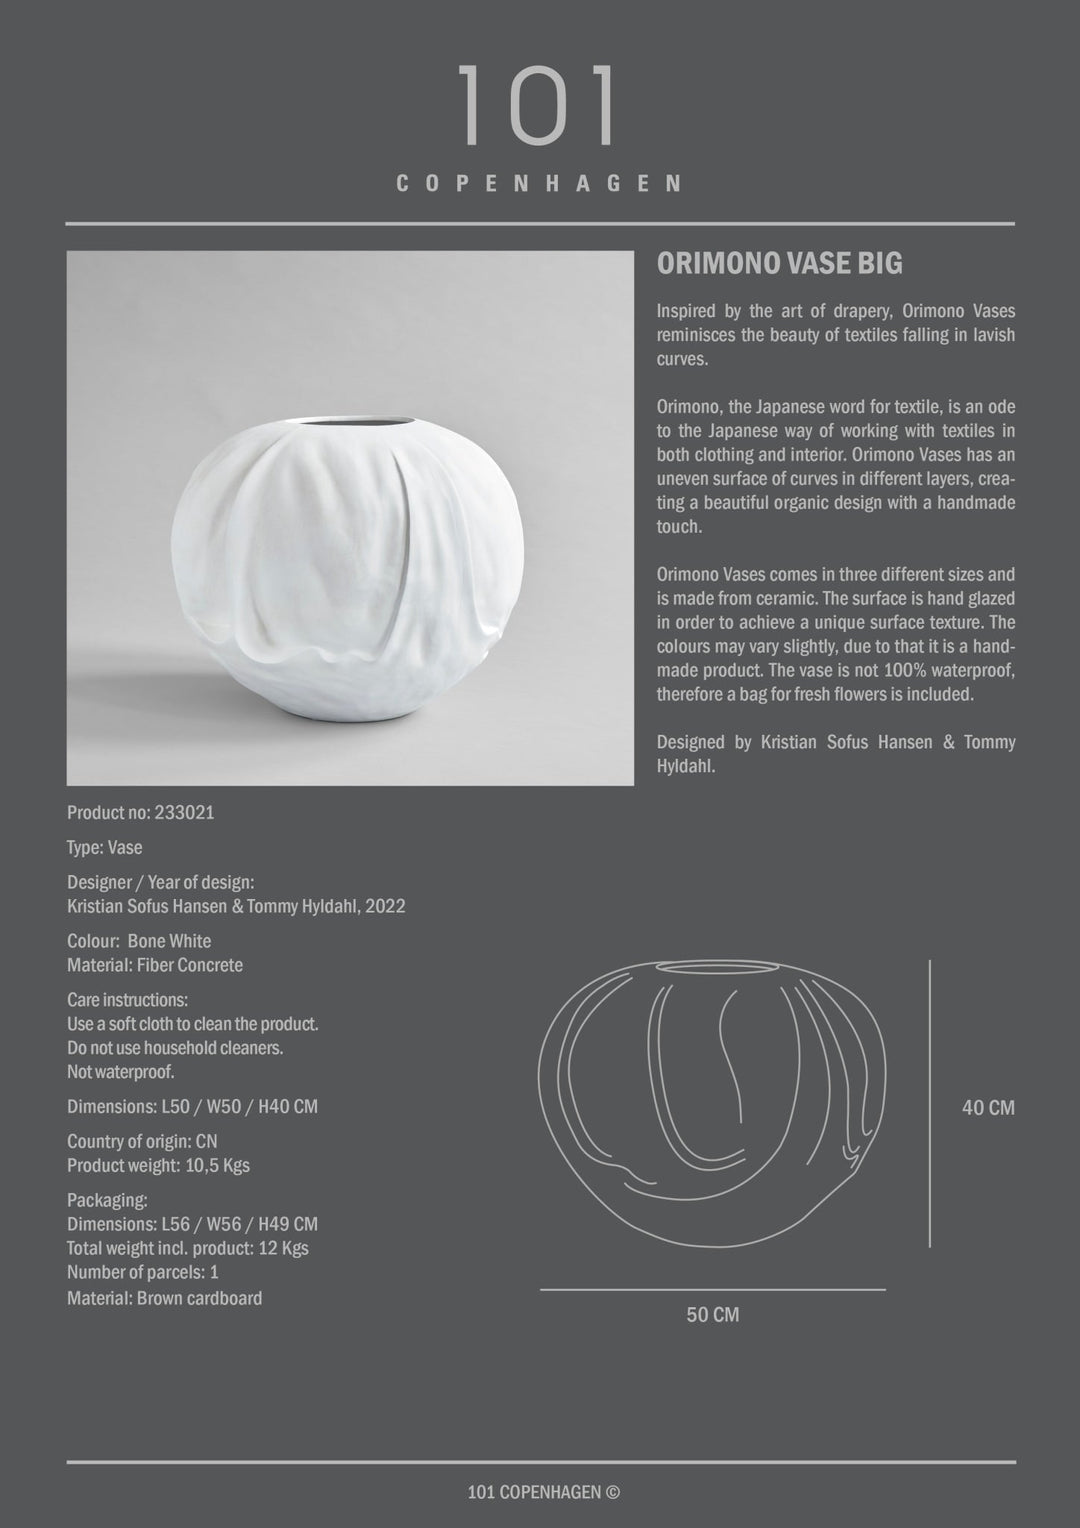 101 Copenhagen Orimono Vase - $85.00 - $645.00